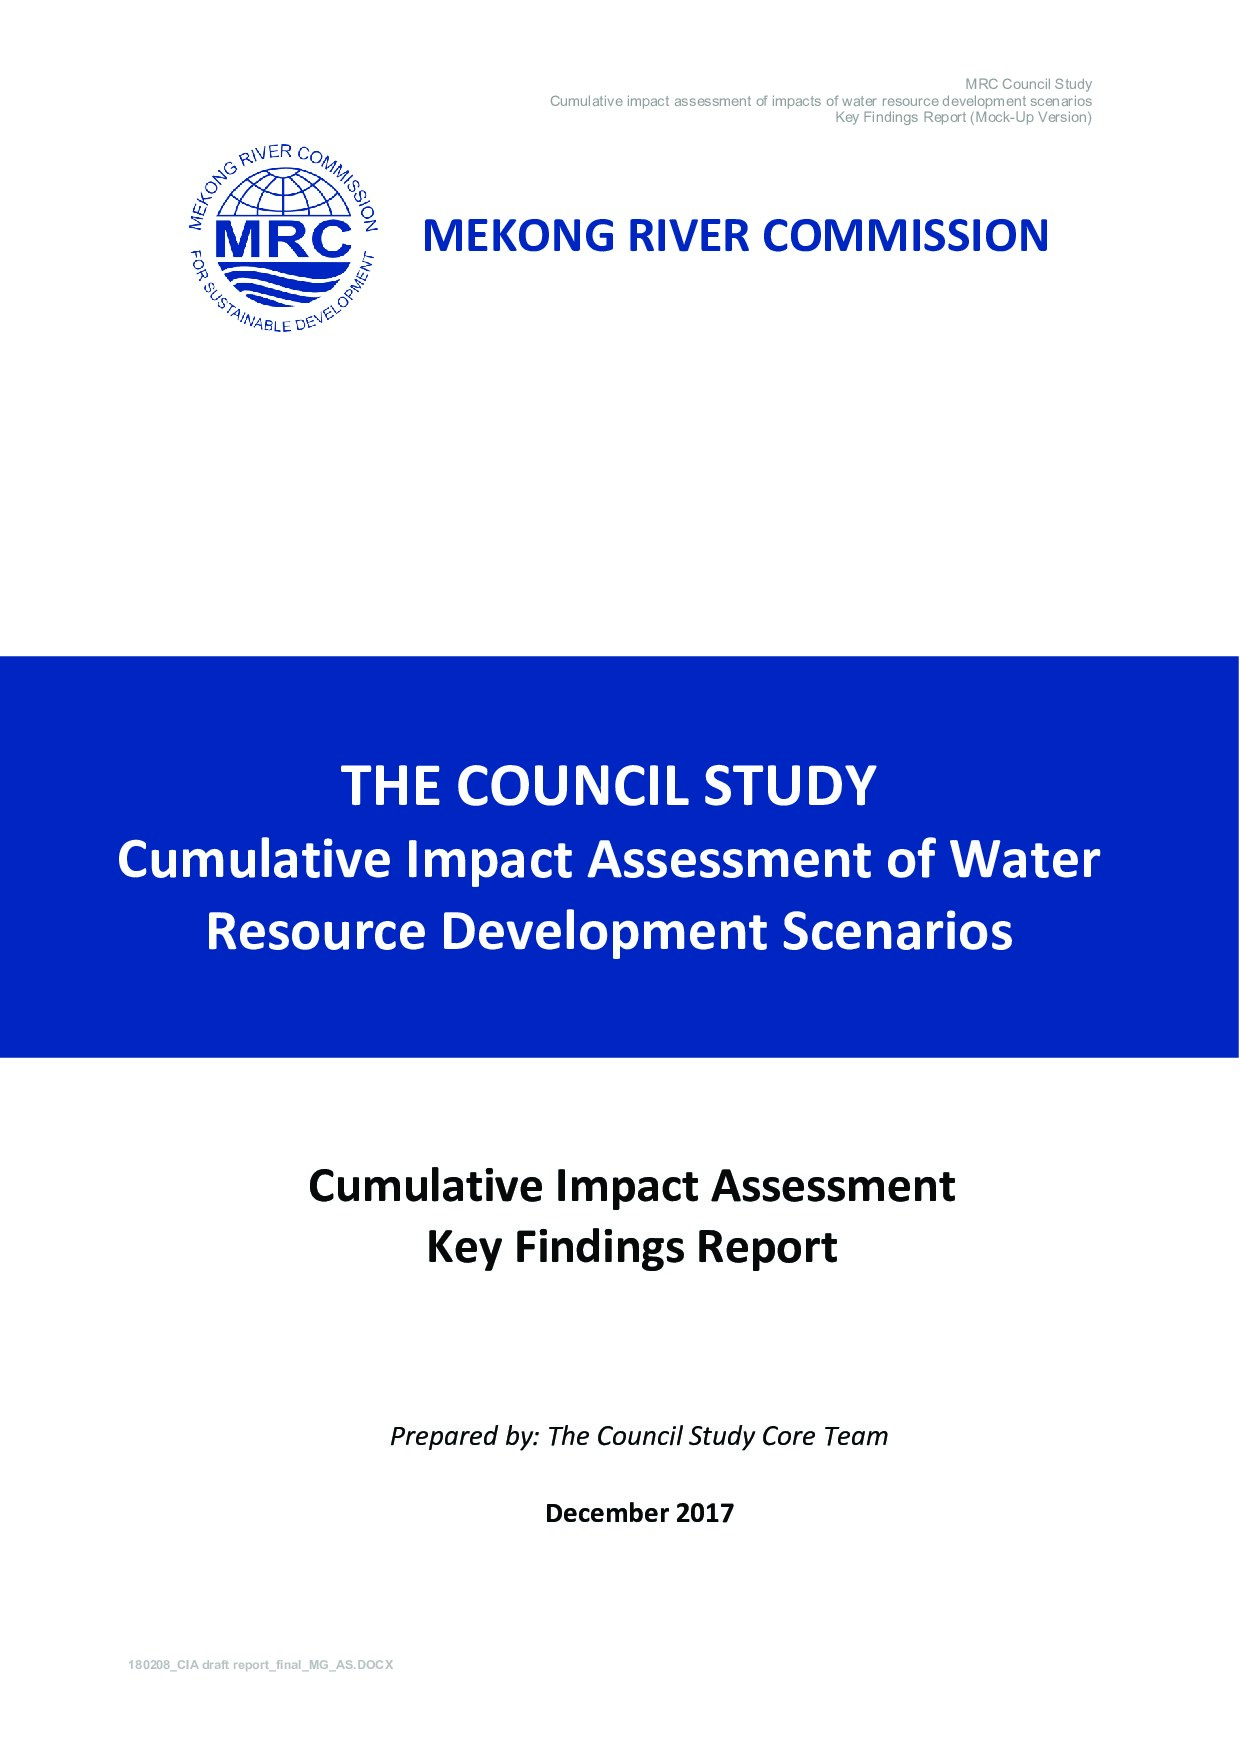 THE COUNCIL STUDY Cumulative Impact Assessment of Water Resource Development Scenarios